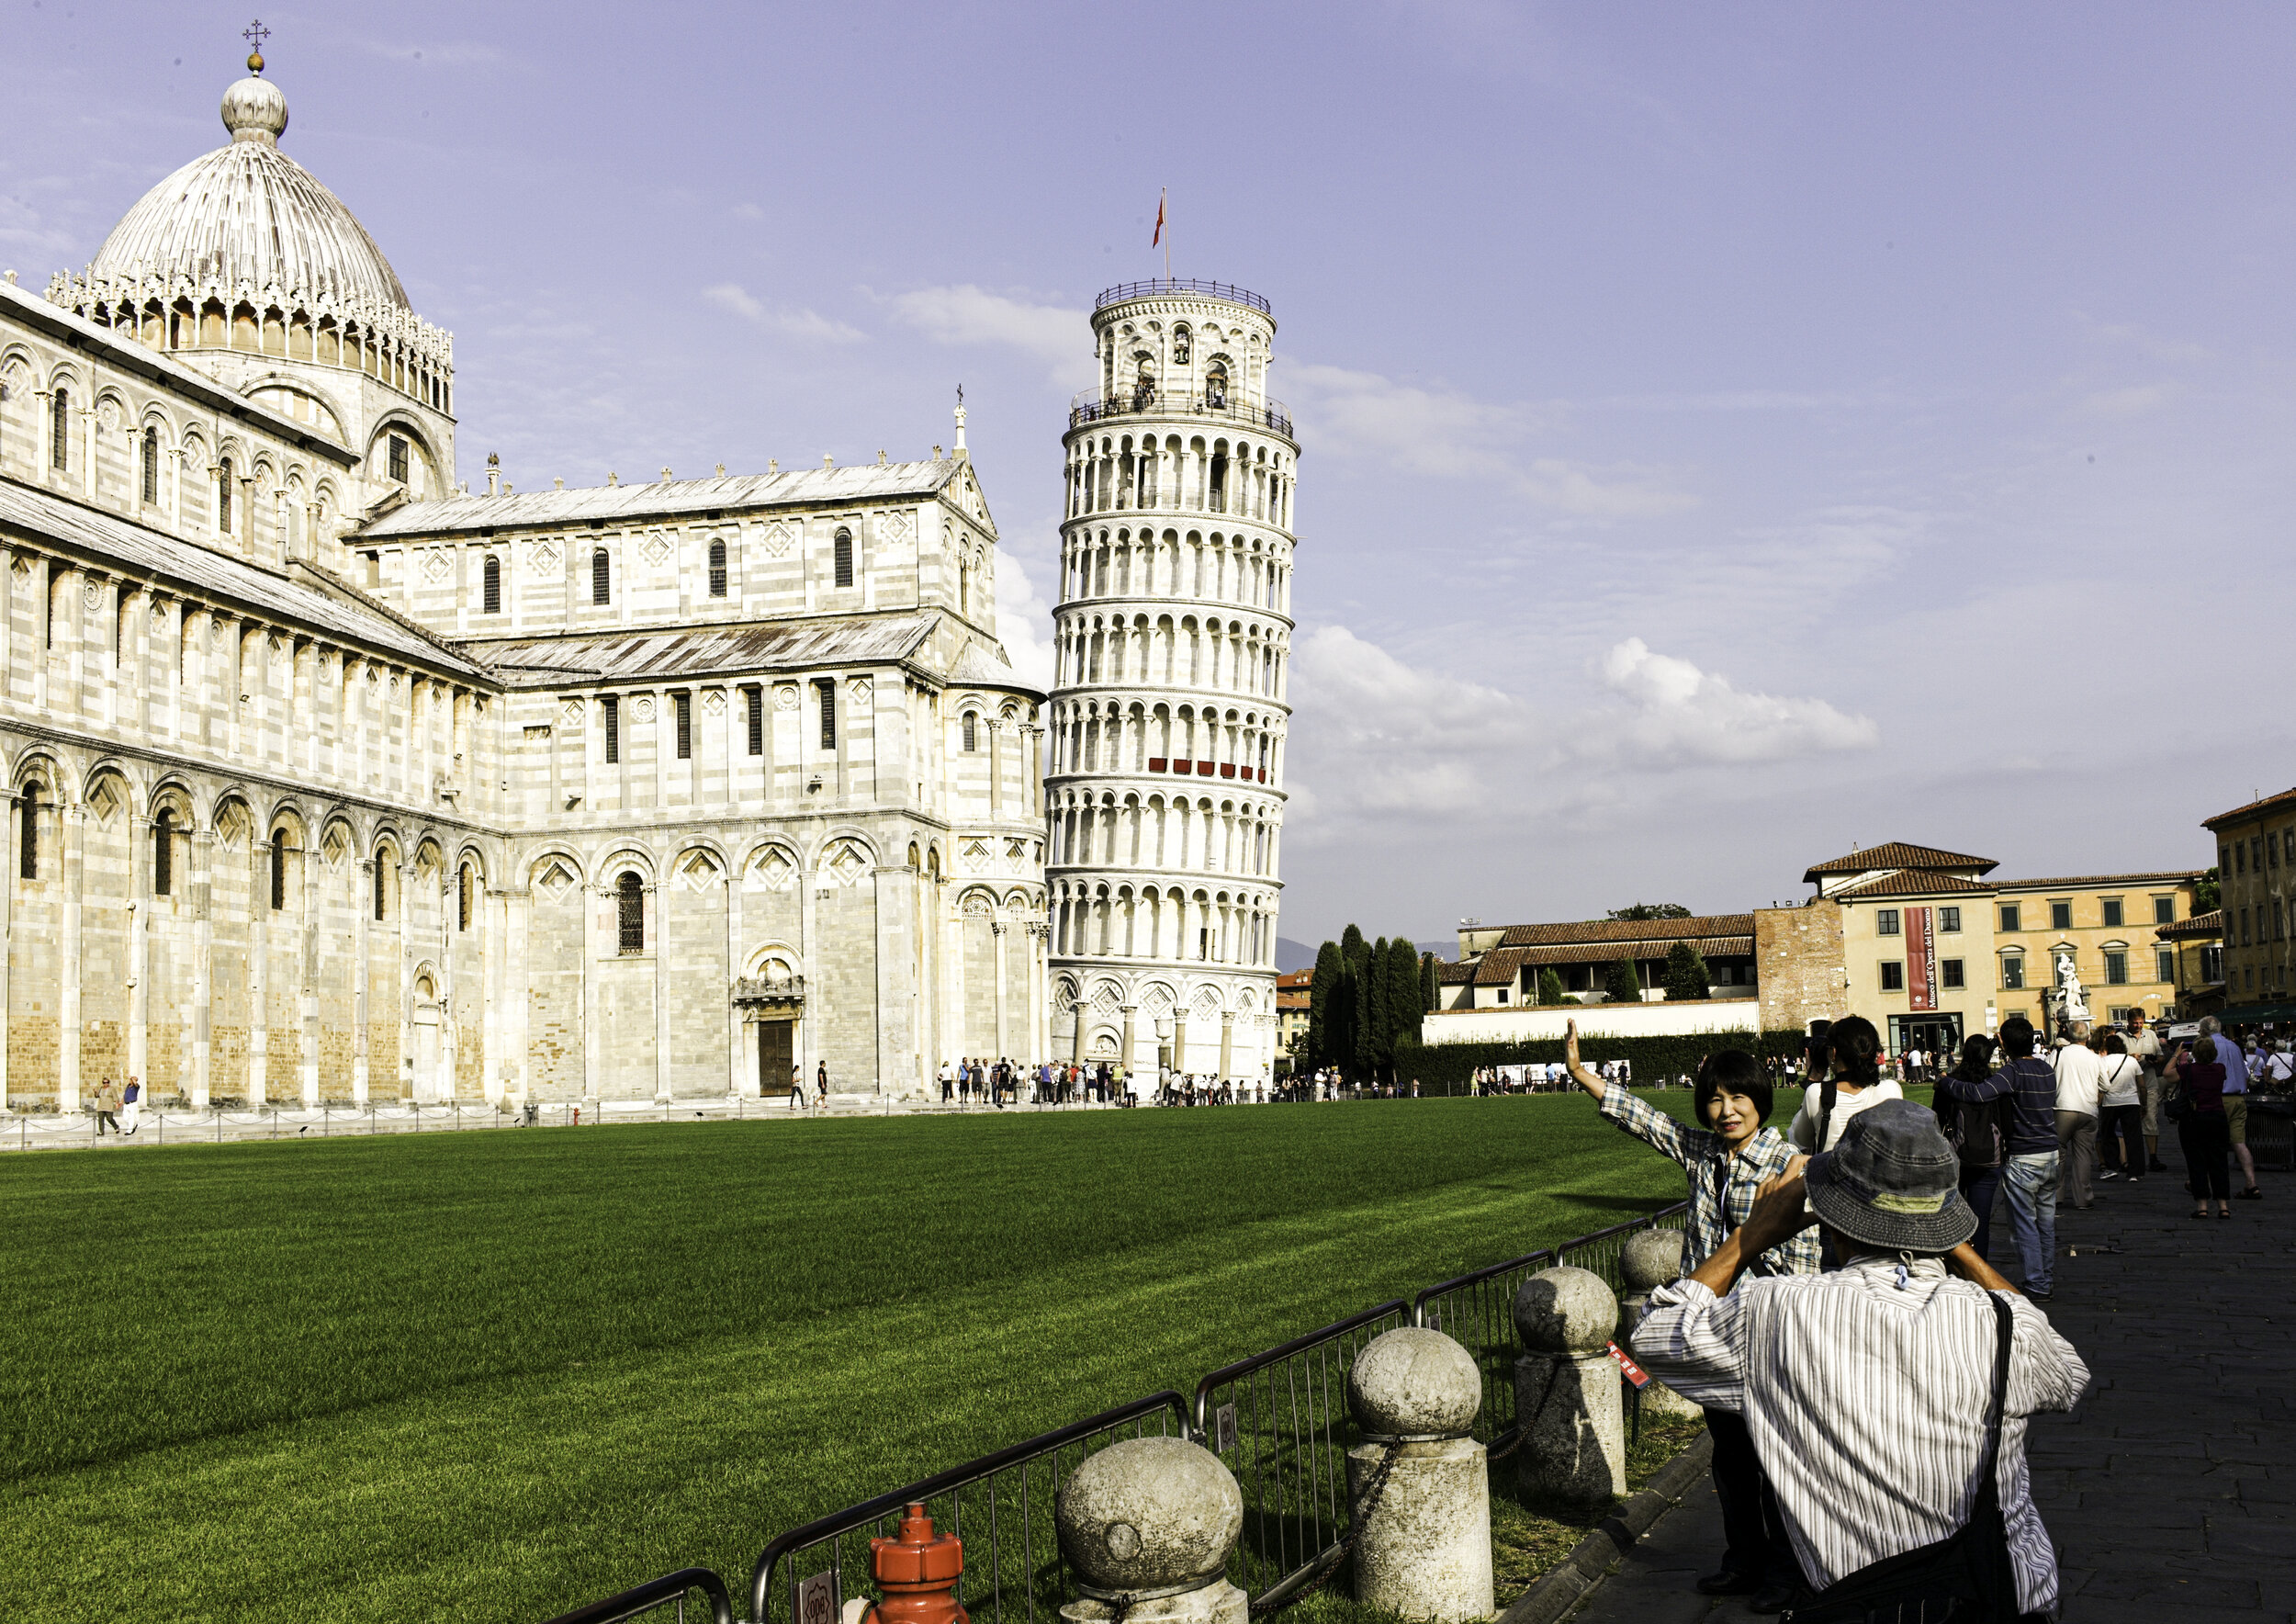 Tower of Pisa - Italy / 2014